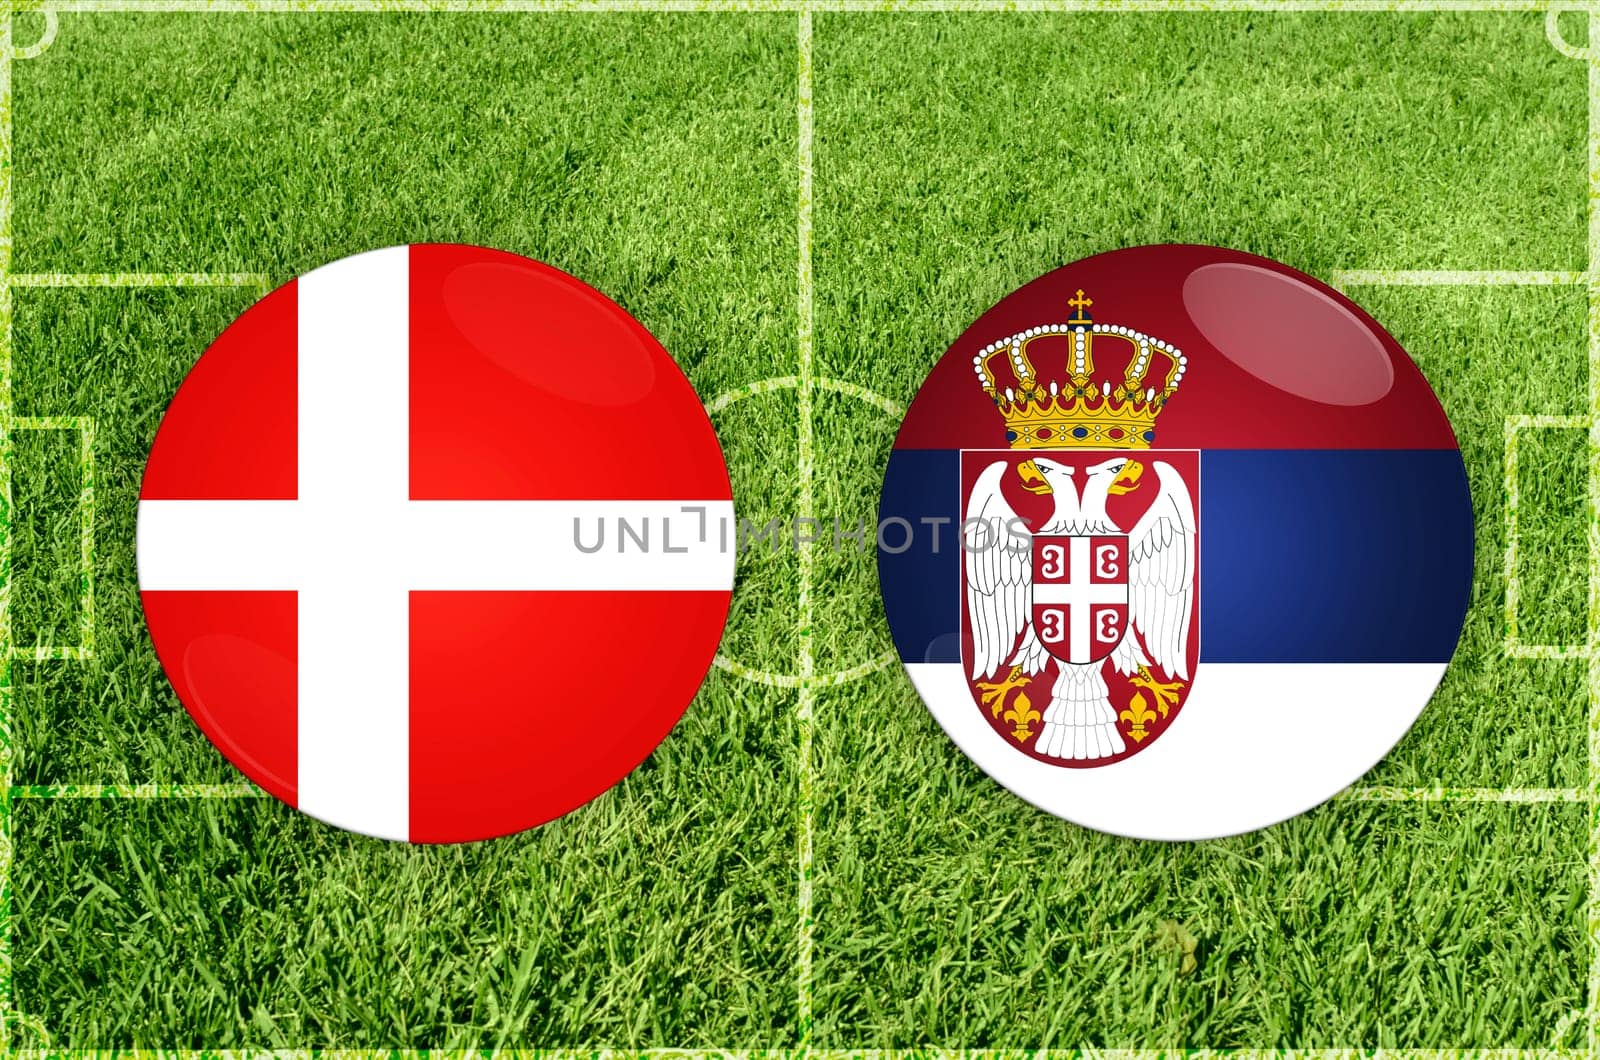 Denmark vs Serbia football match by rusak